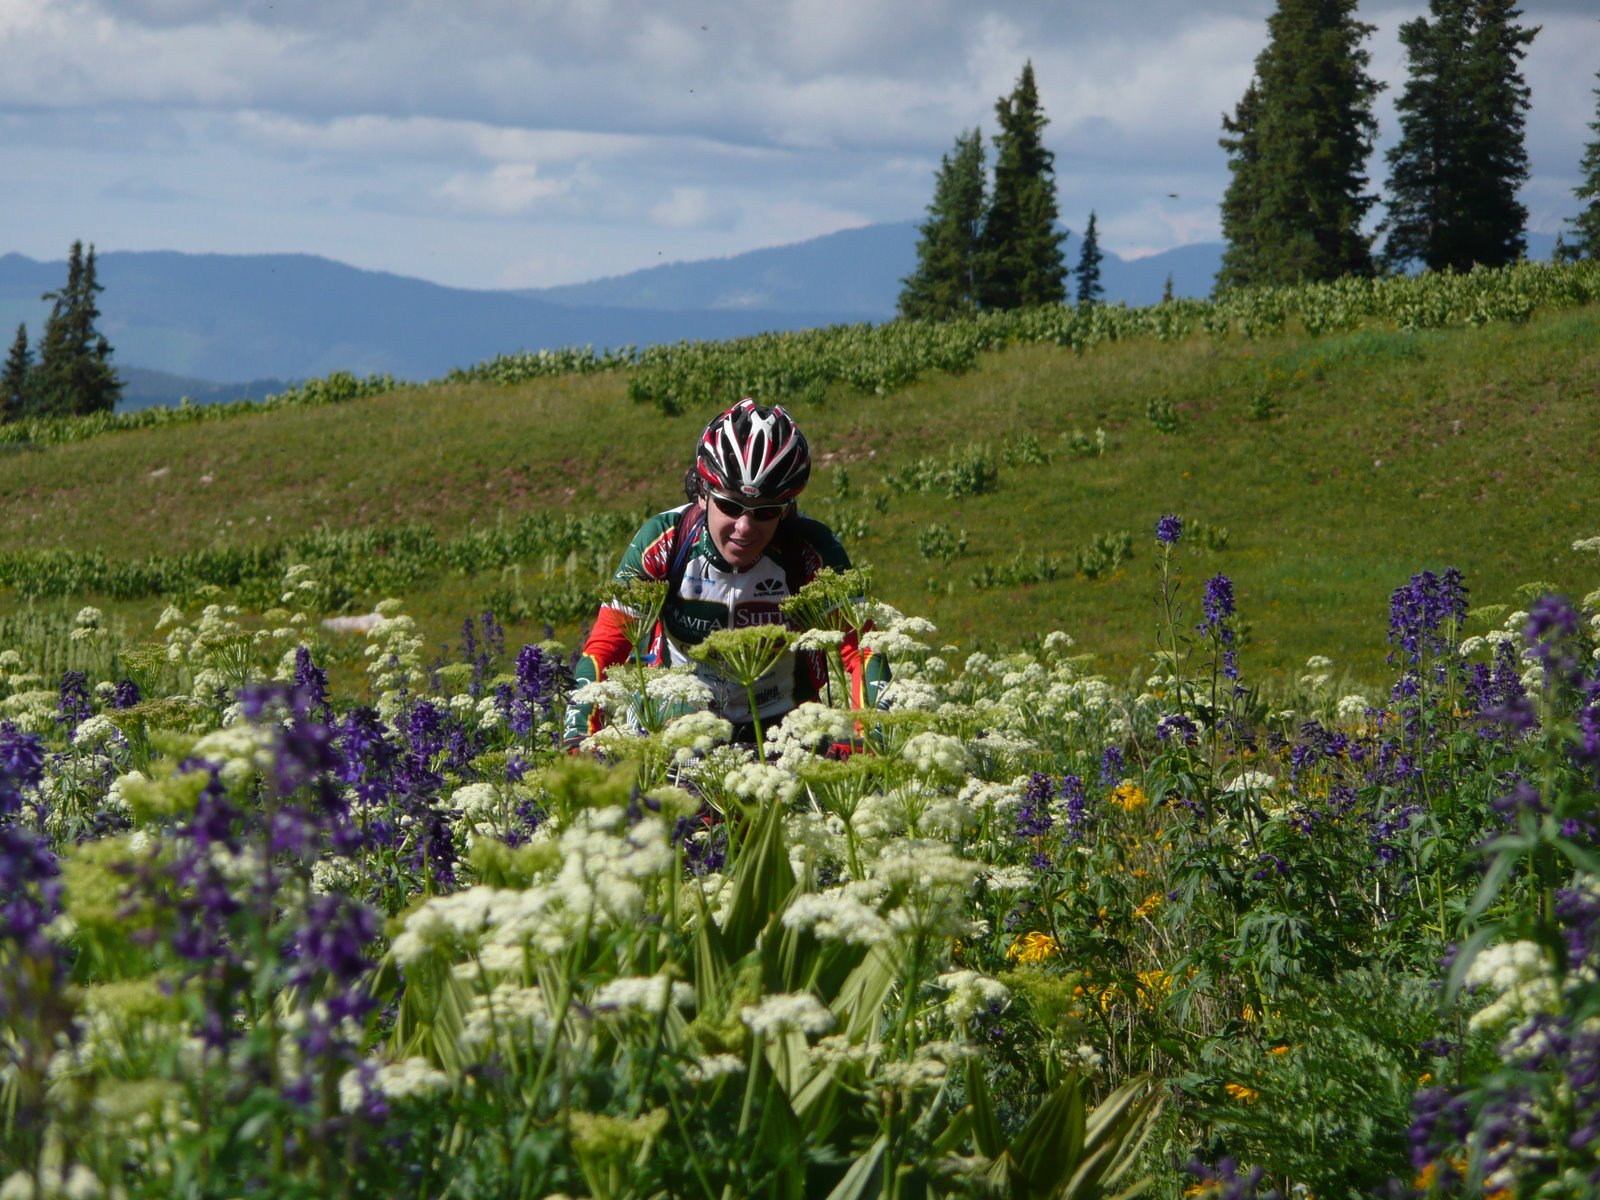 [Krista+riding+through+the+flowers+on+Engineer+Mountain+Trail.jpg]